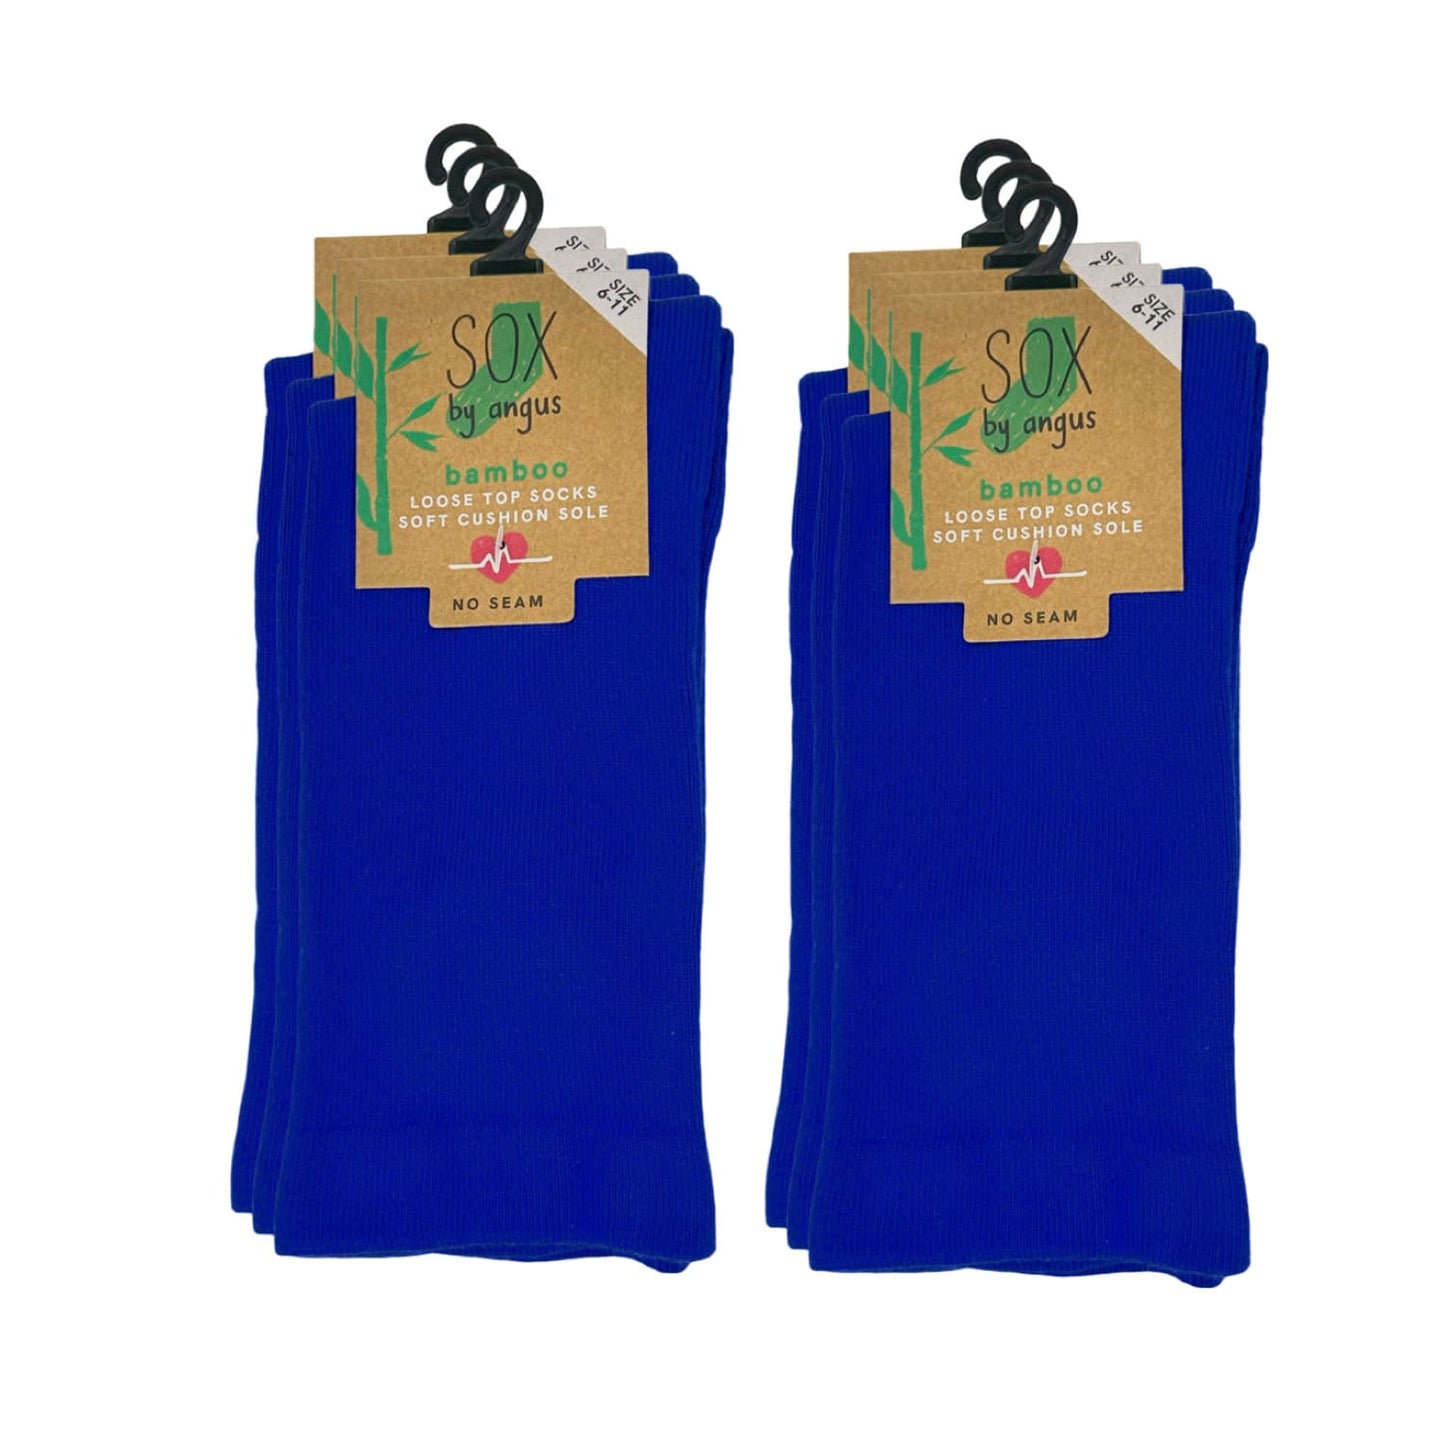 Bamboo Plain Cushion Foot Loose Top Socks - Royal Blue